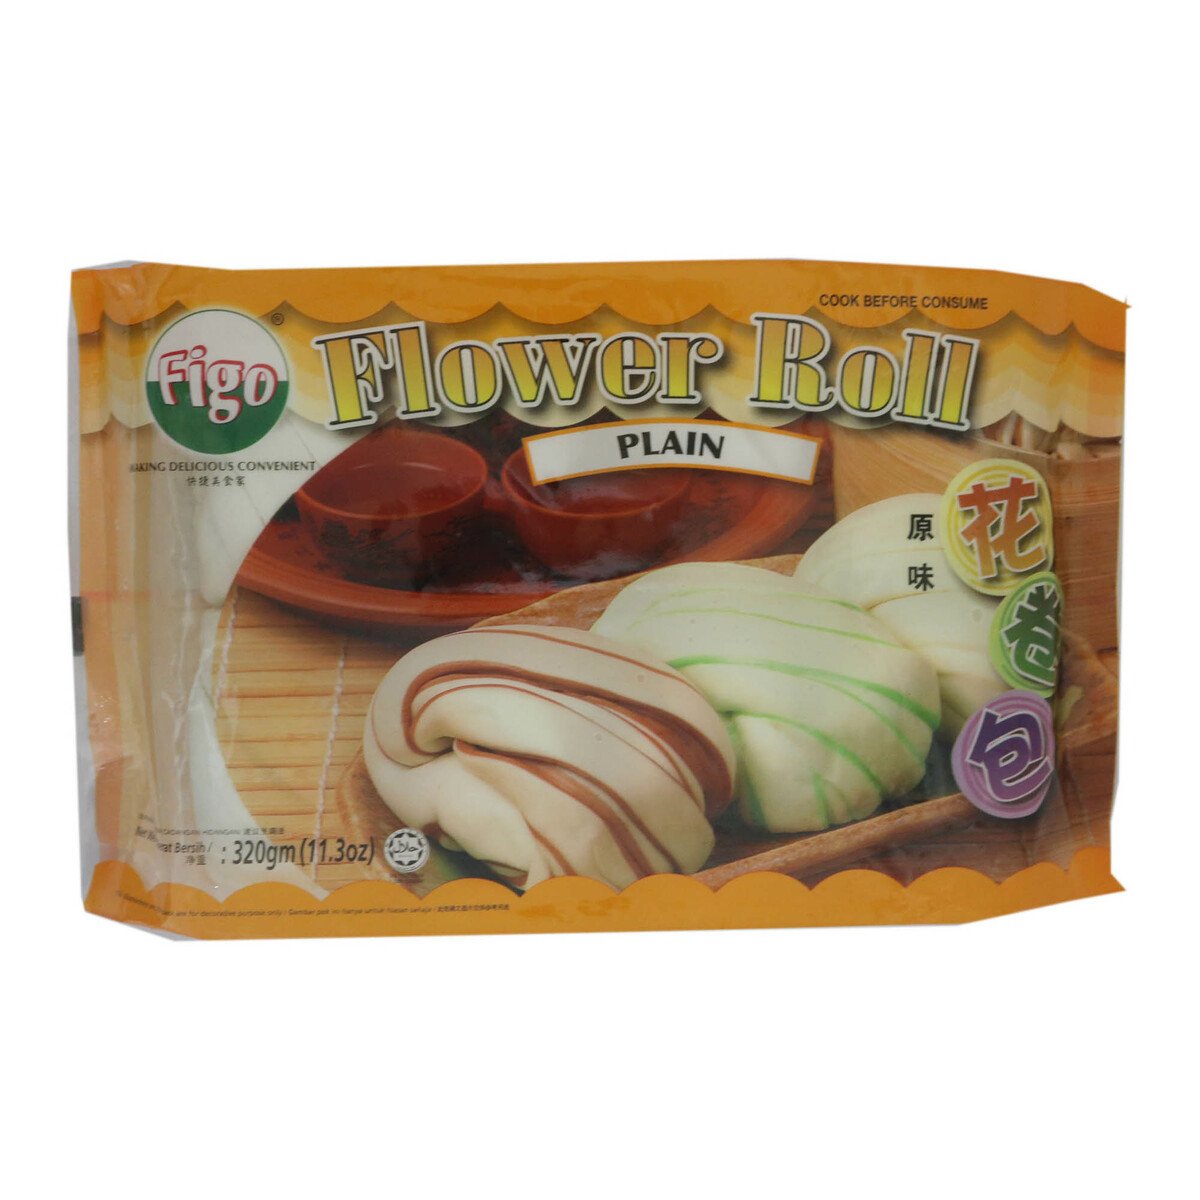 Figo Flower Roll-Plain 320g